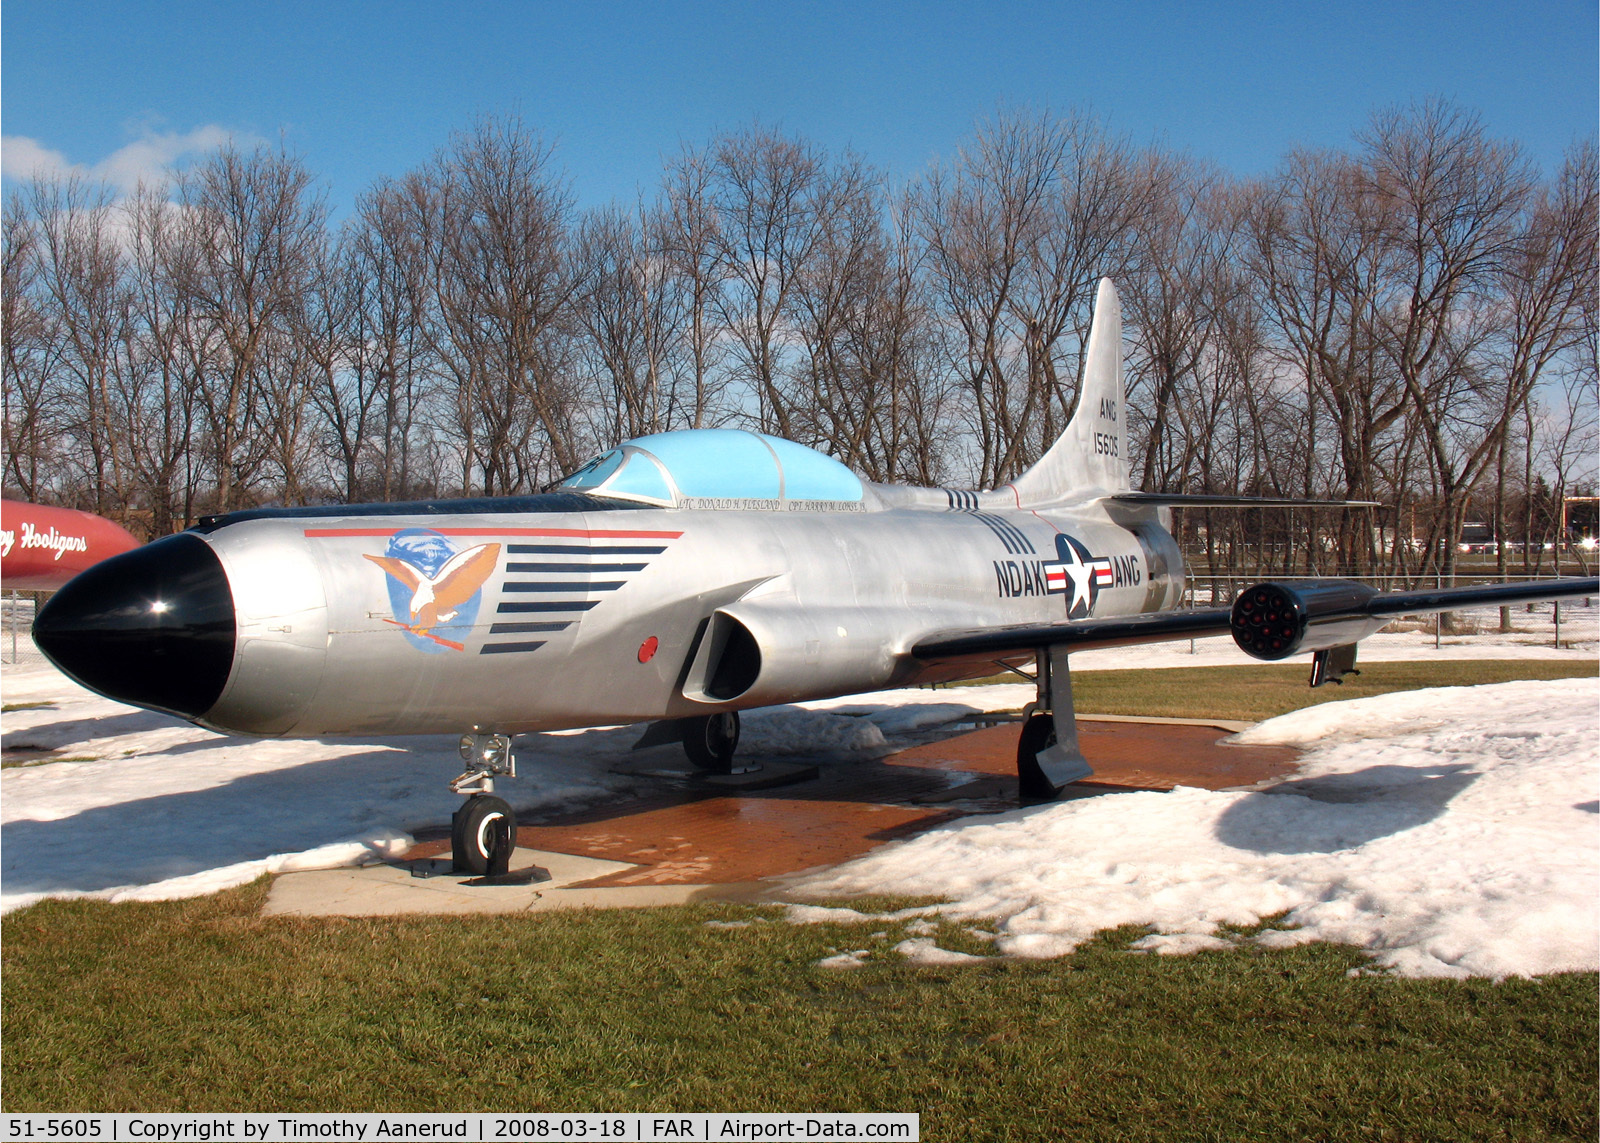 51-5605, Lockheed F-94C Starfire C/N 880-8201, Lockheed F-94C-1-LO Starfire, North Dakota Air National Guard display area. 51-5605